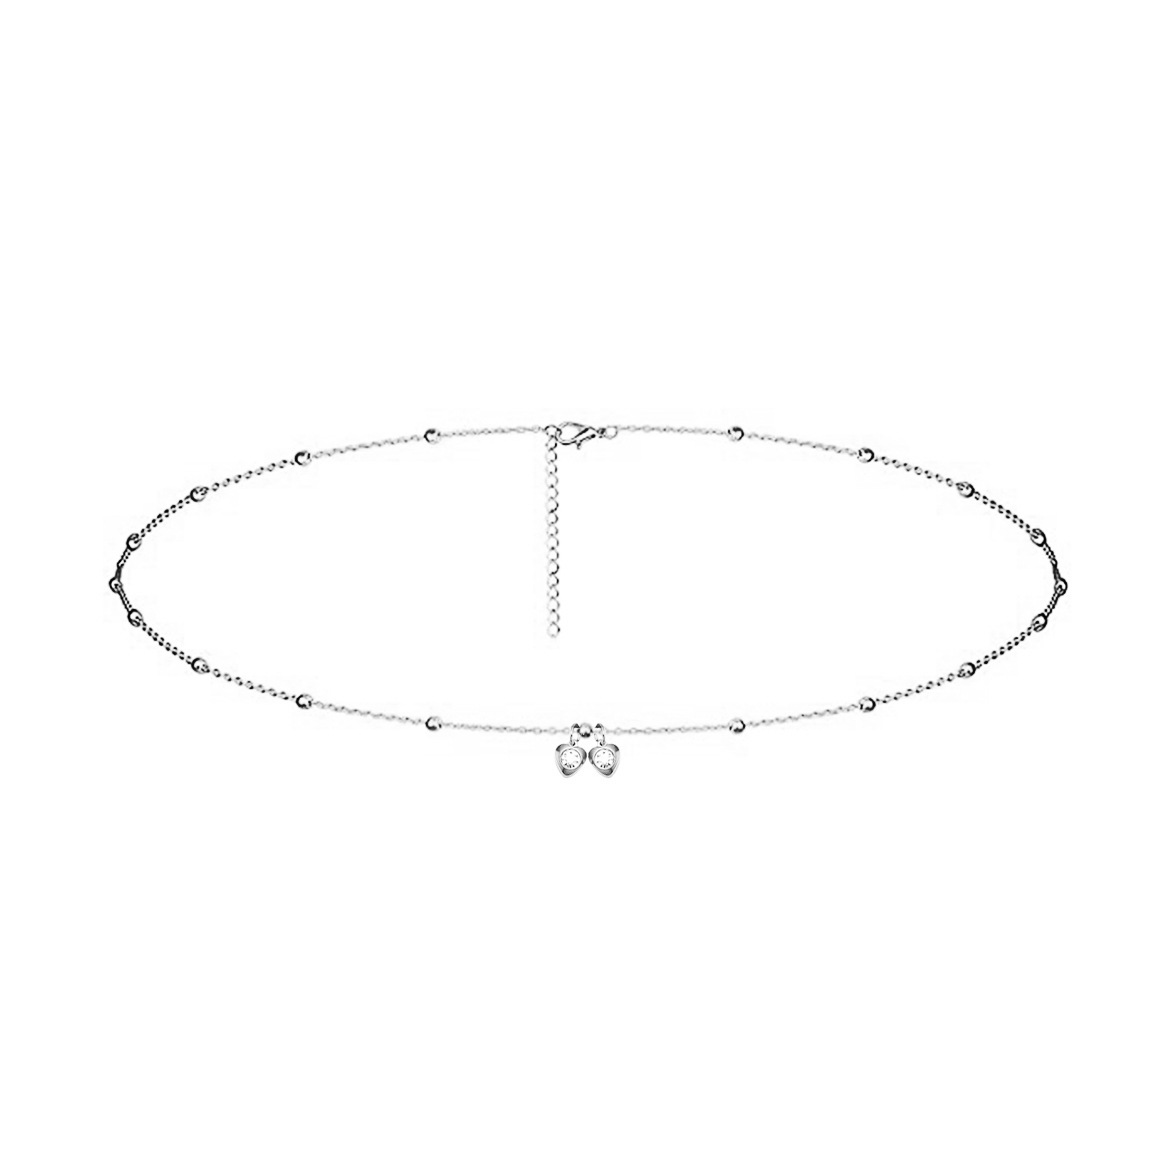 ALAD197-01-bead chain silver 90cm-20cm